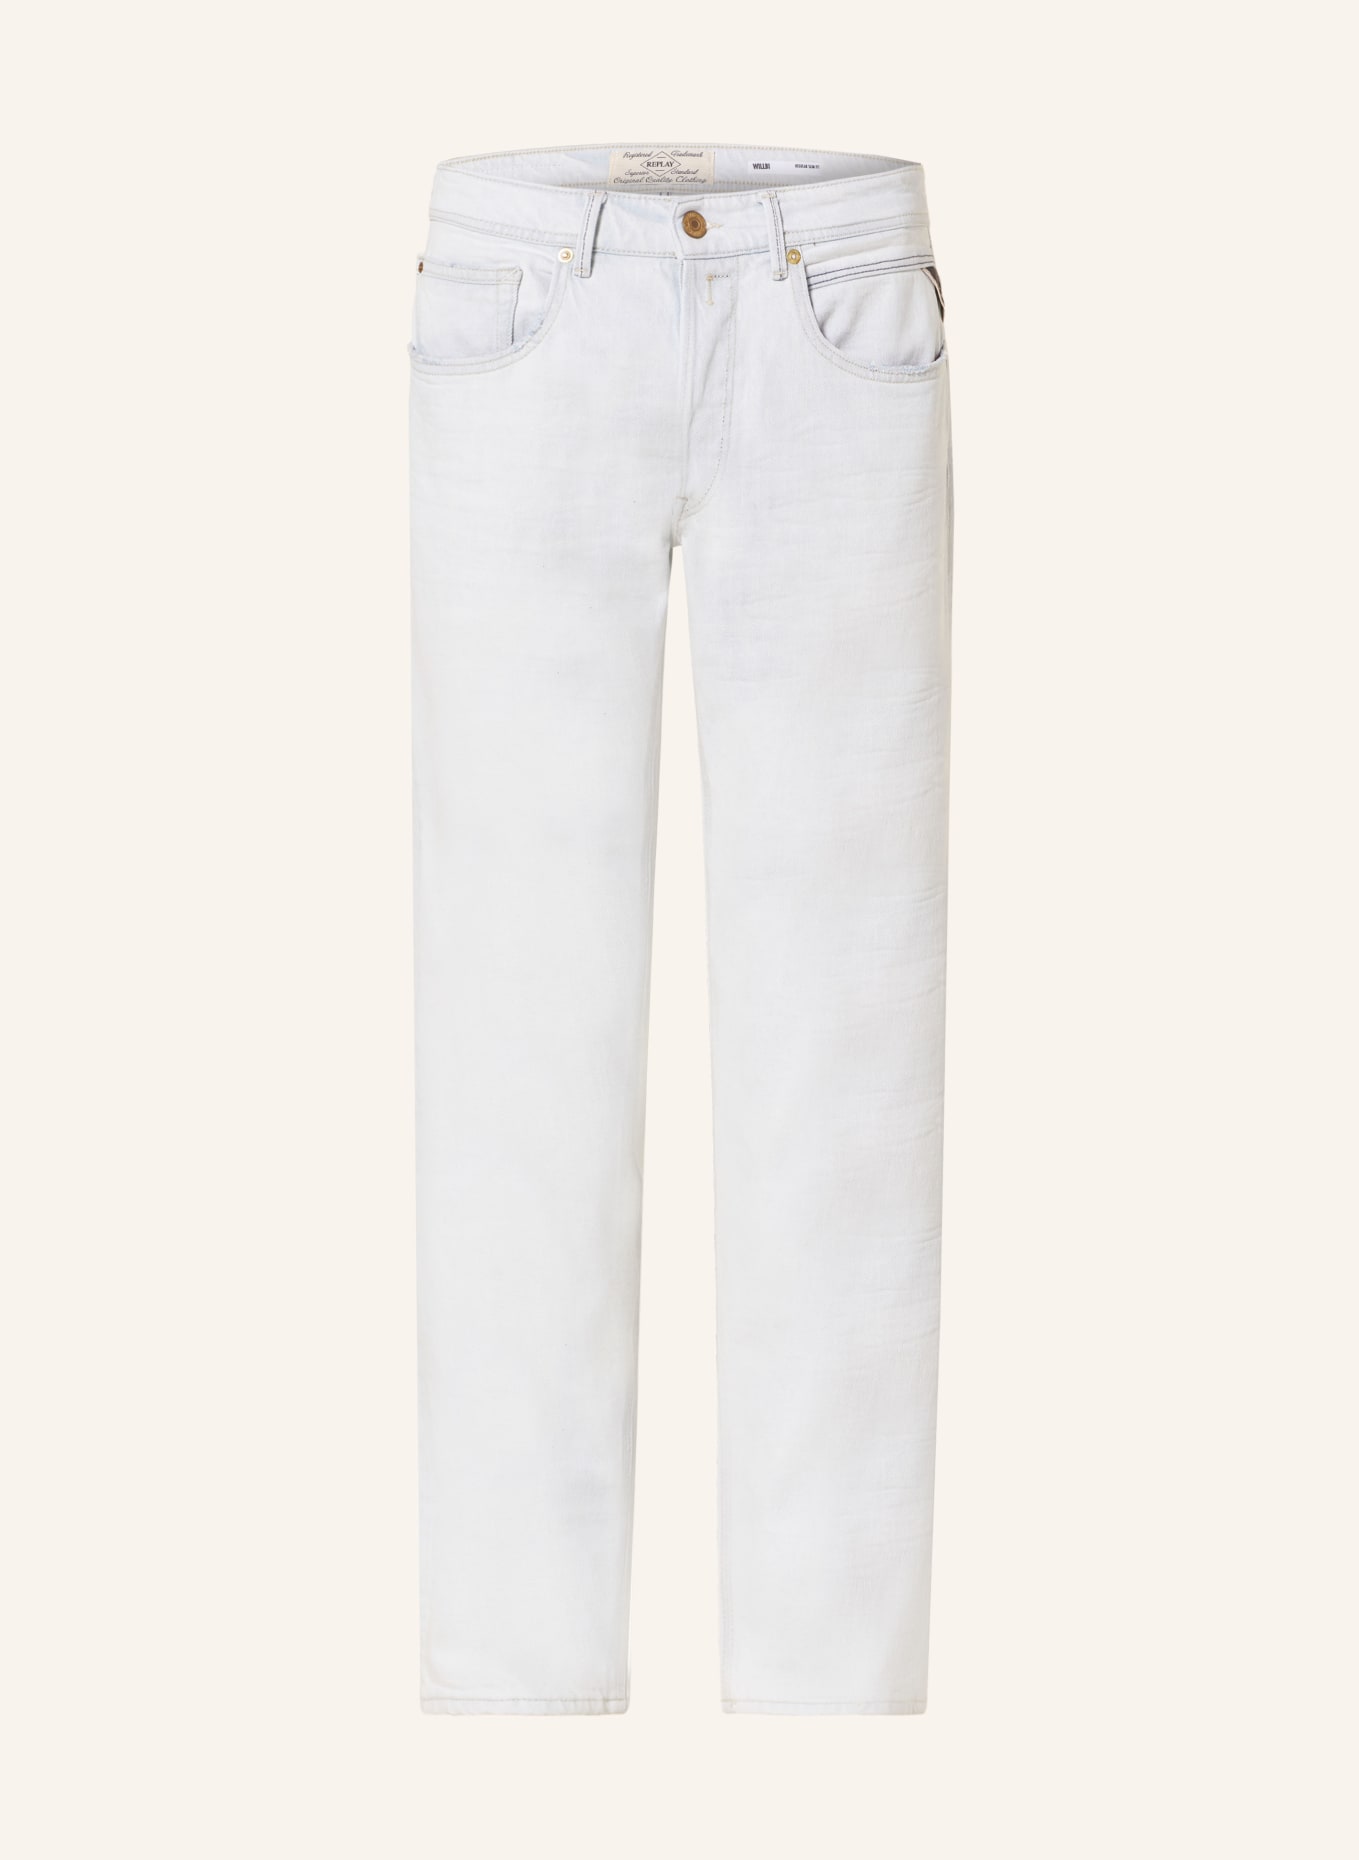 REPLAY Jeans Regular Slim Fit, Farbe: 011 SUPERLIGHT BLUE (Bild 1)